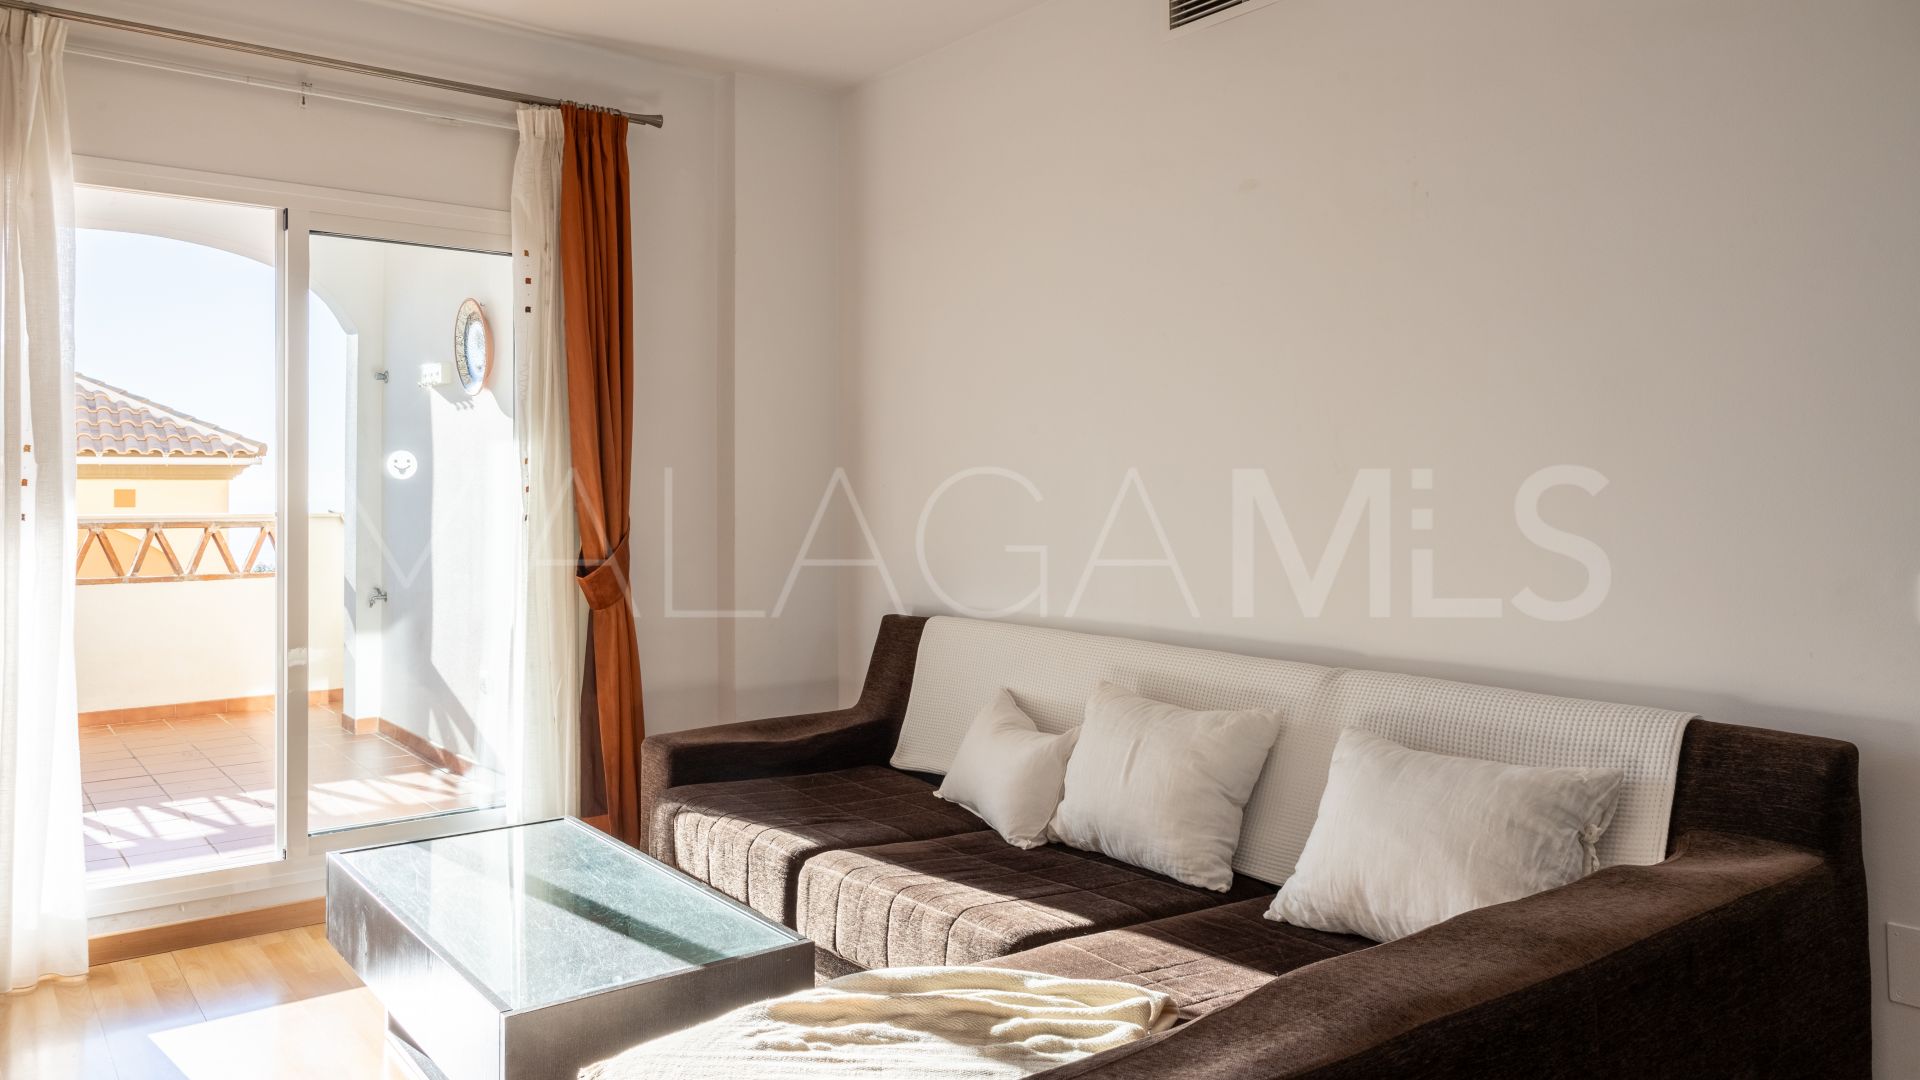 Apartment for sale in La Capellania with 2 bedrooms